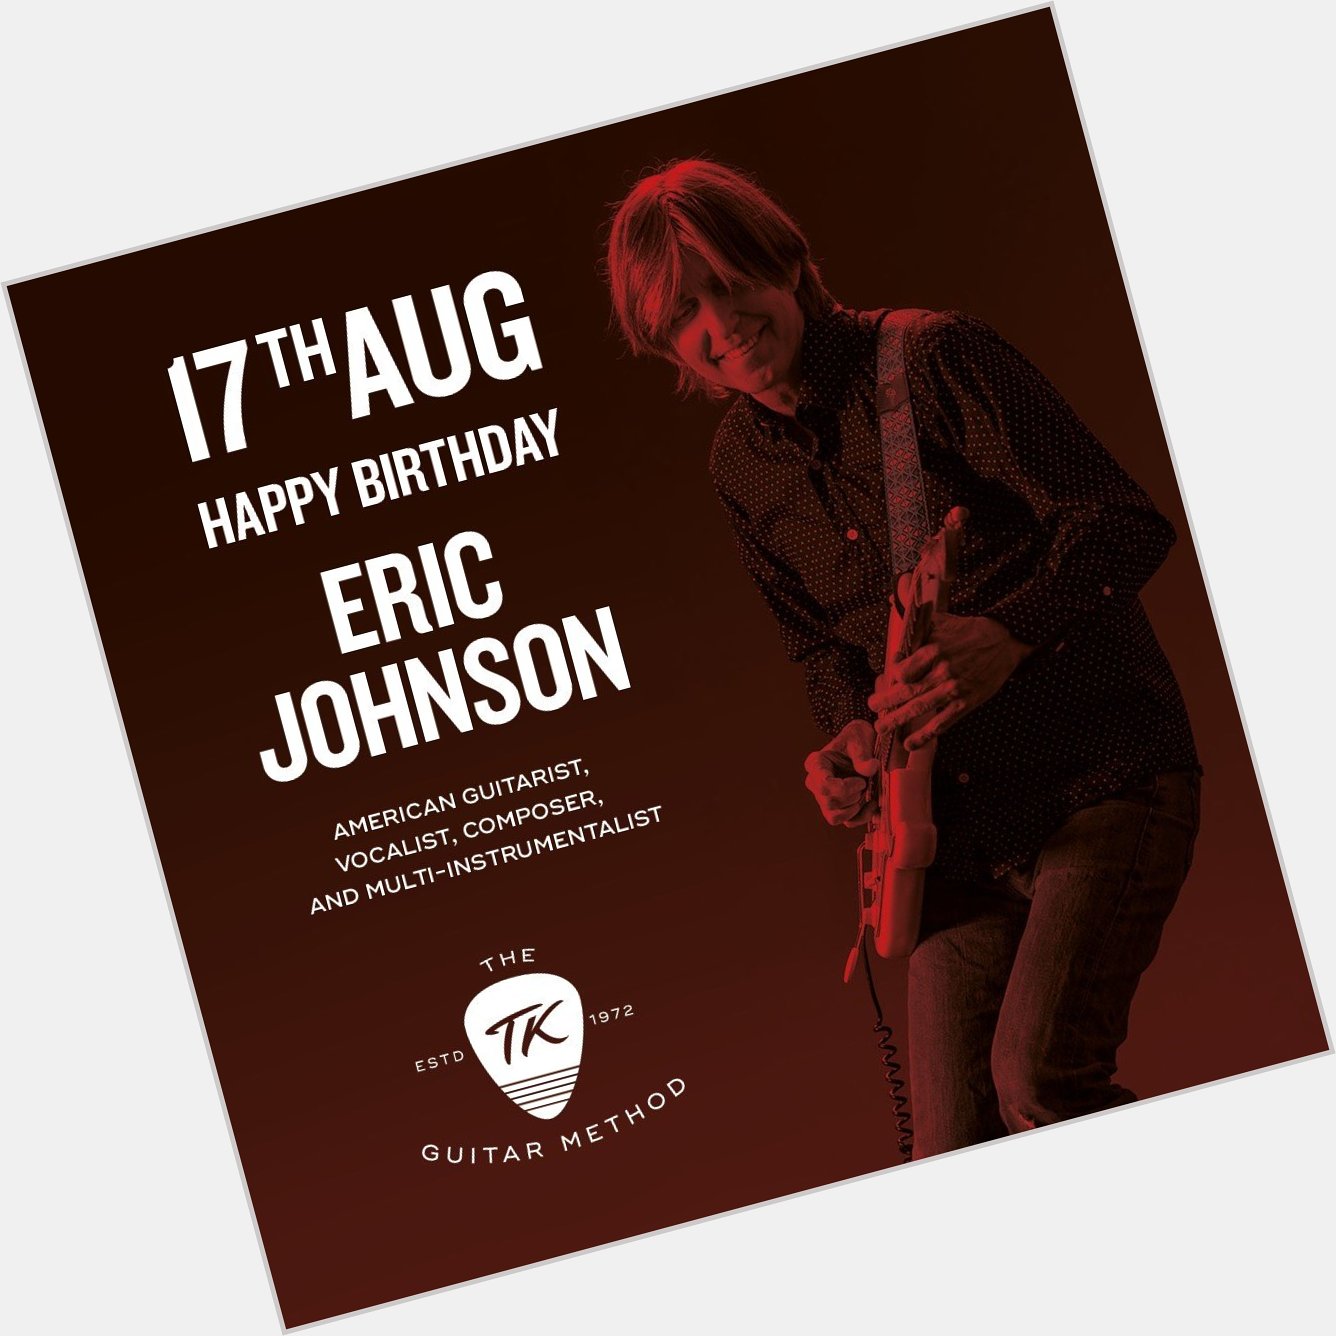 Happy Birthday to Eric Johnson, American guitarist, vocalist, composer and multi-instrumentalist 